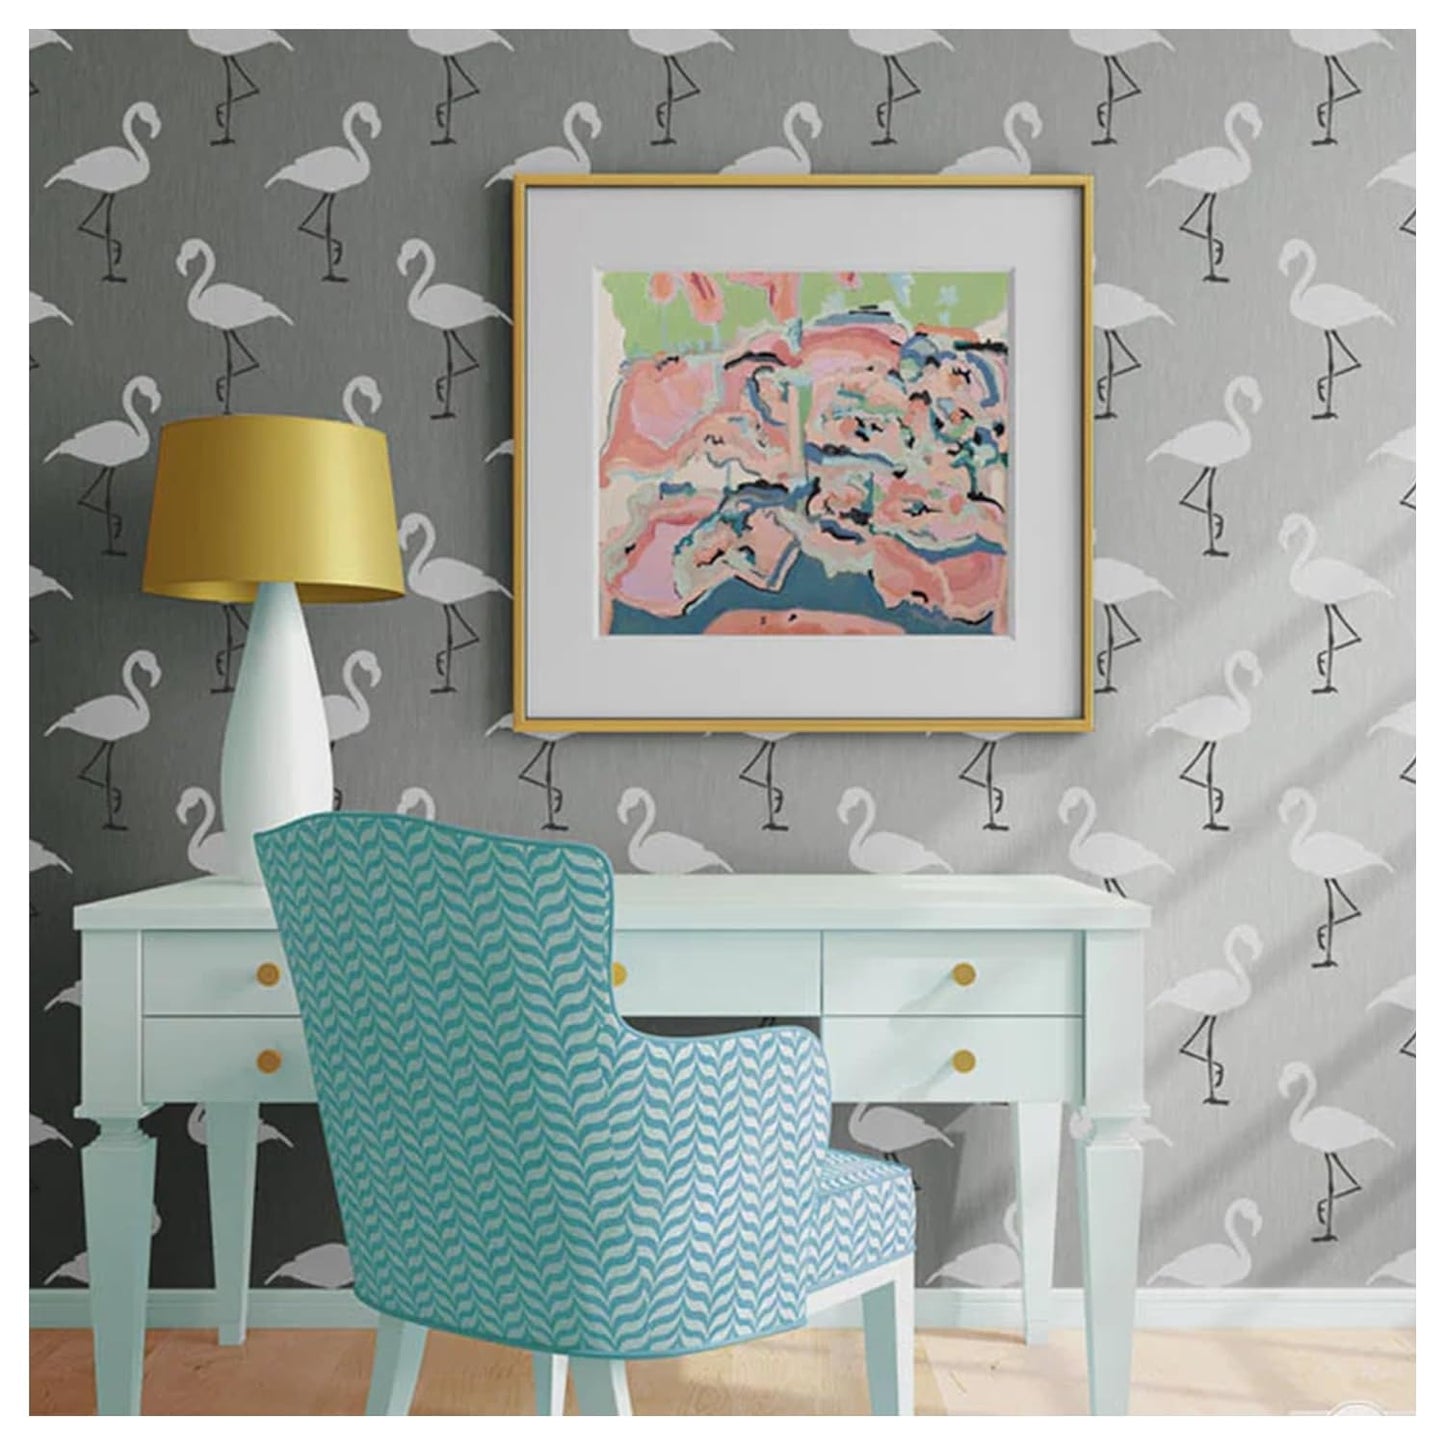 Latest Flamingo Bird Kids Room Wall Stencil -Pack of 1, Sheet Size 24 x 36 inch/Design Size 22 x 34 inch